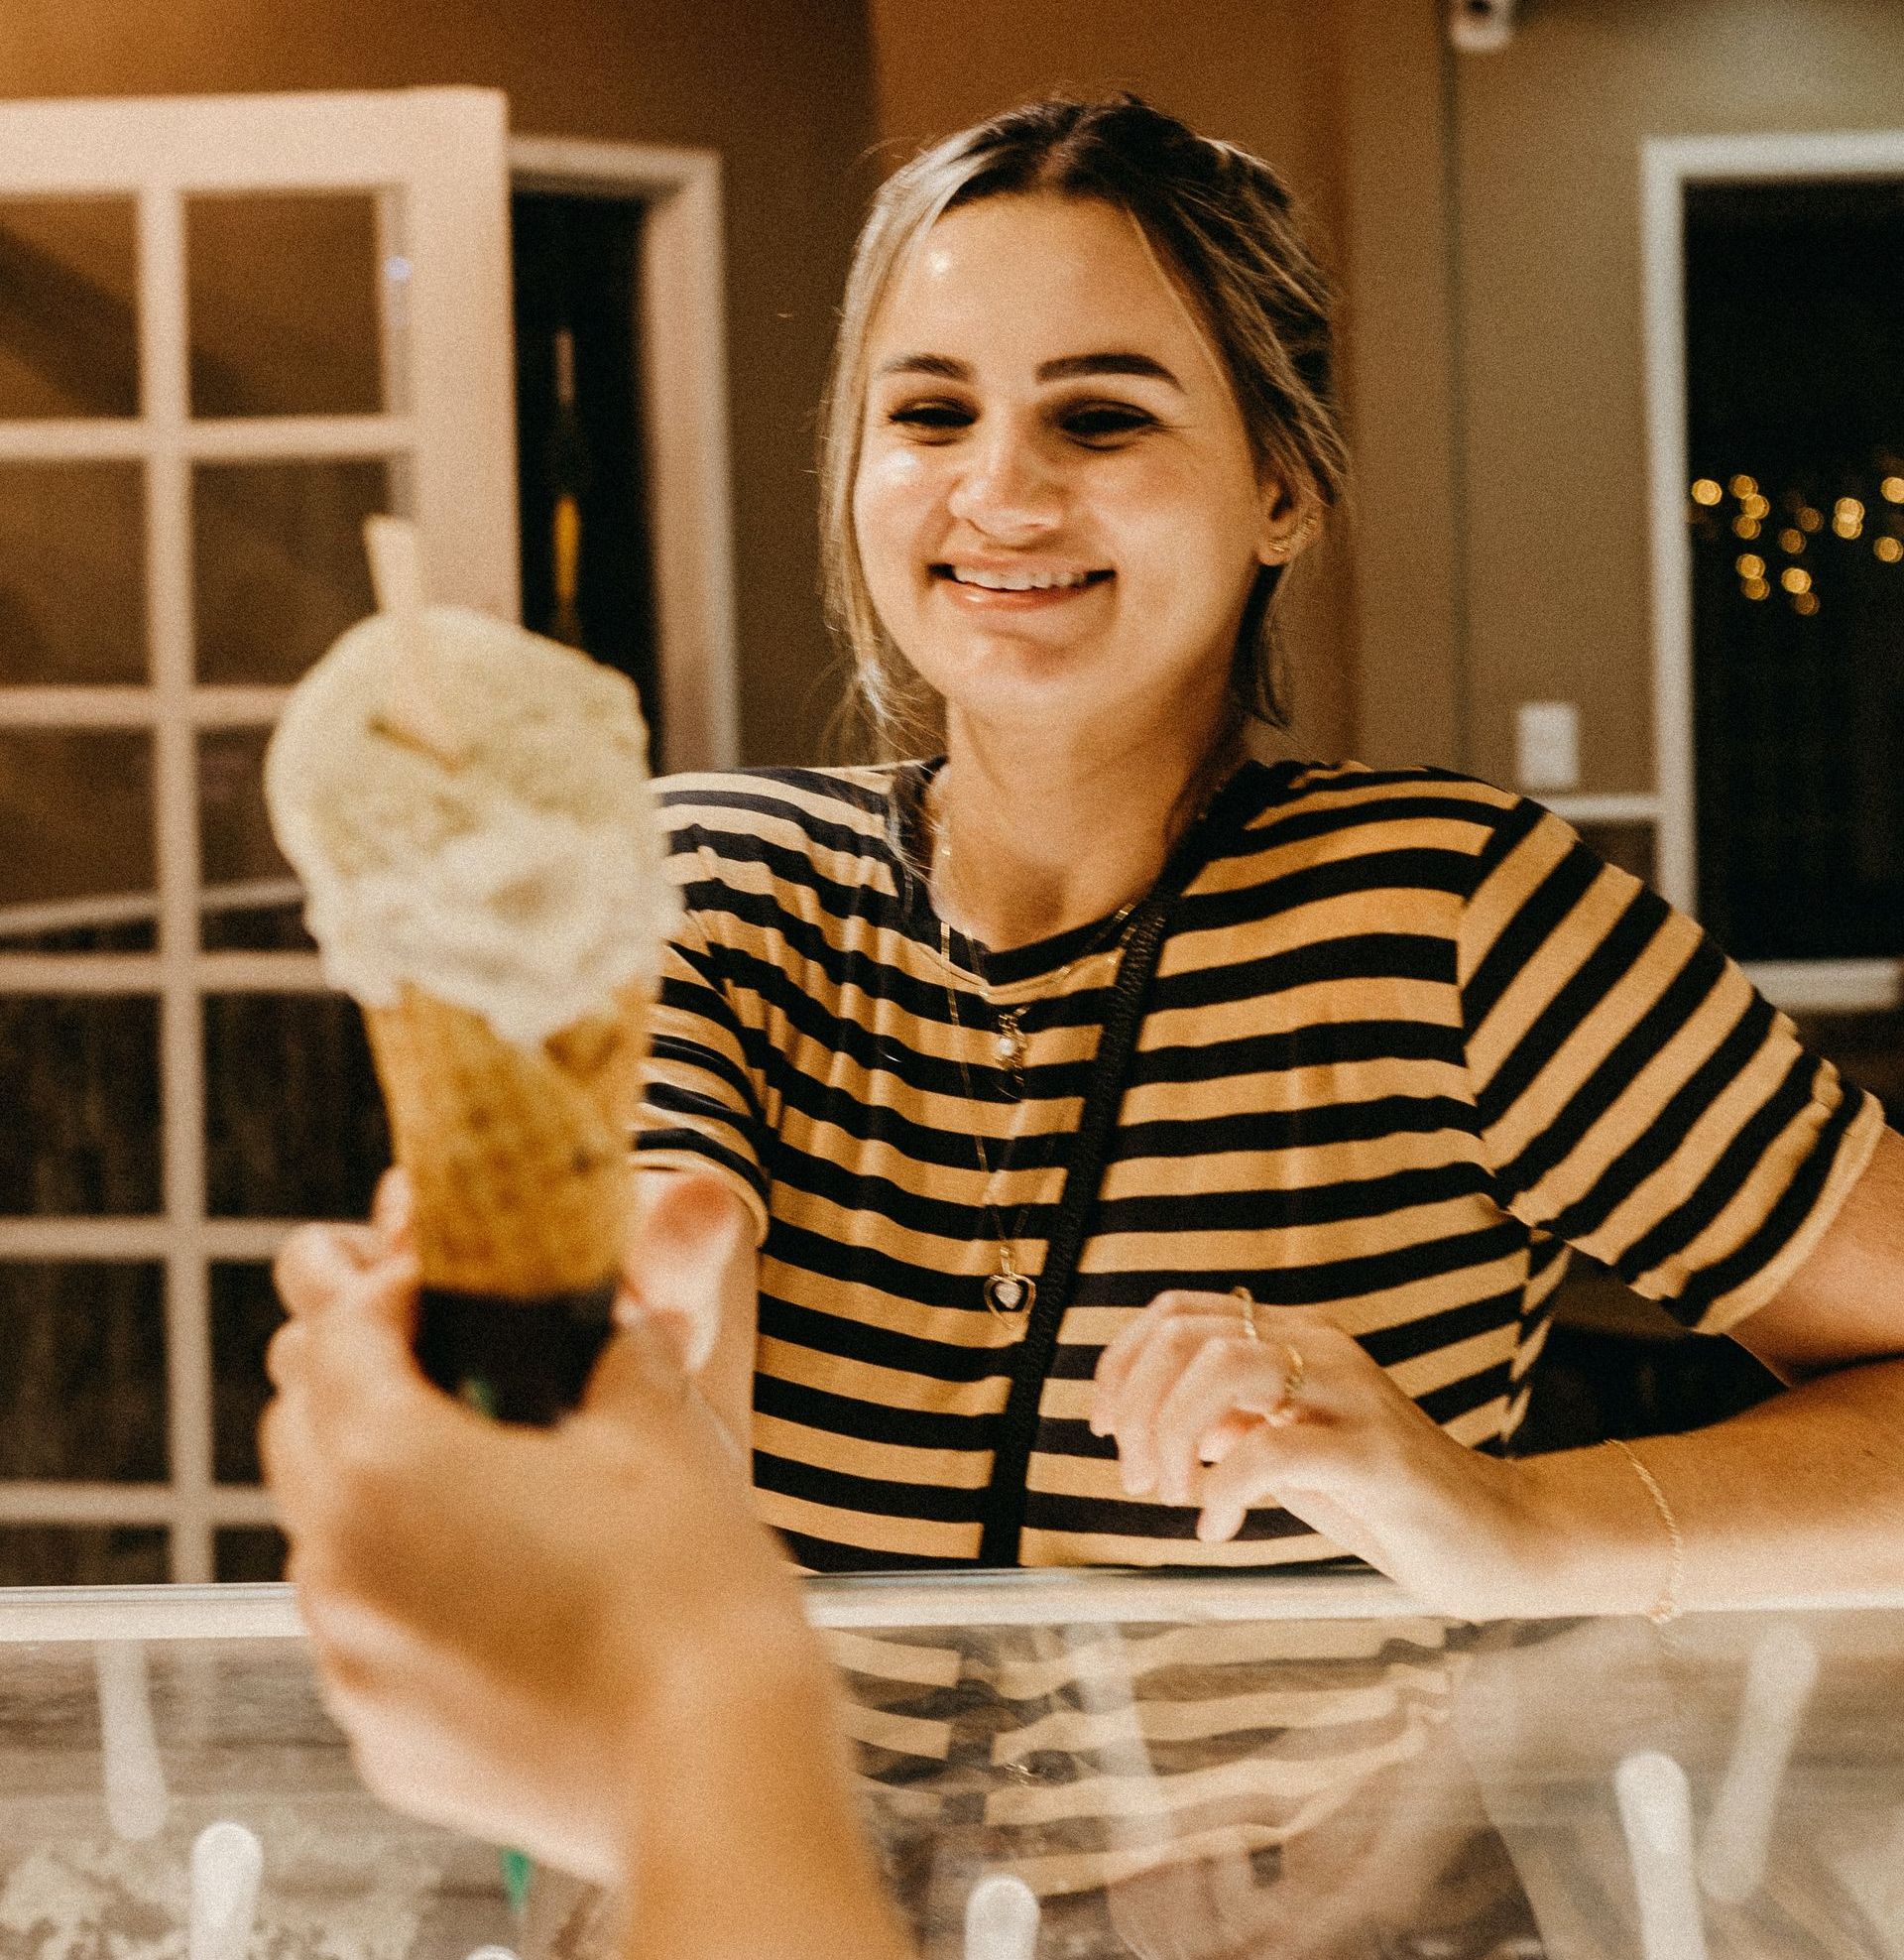 customer buying an ice cream cone